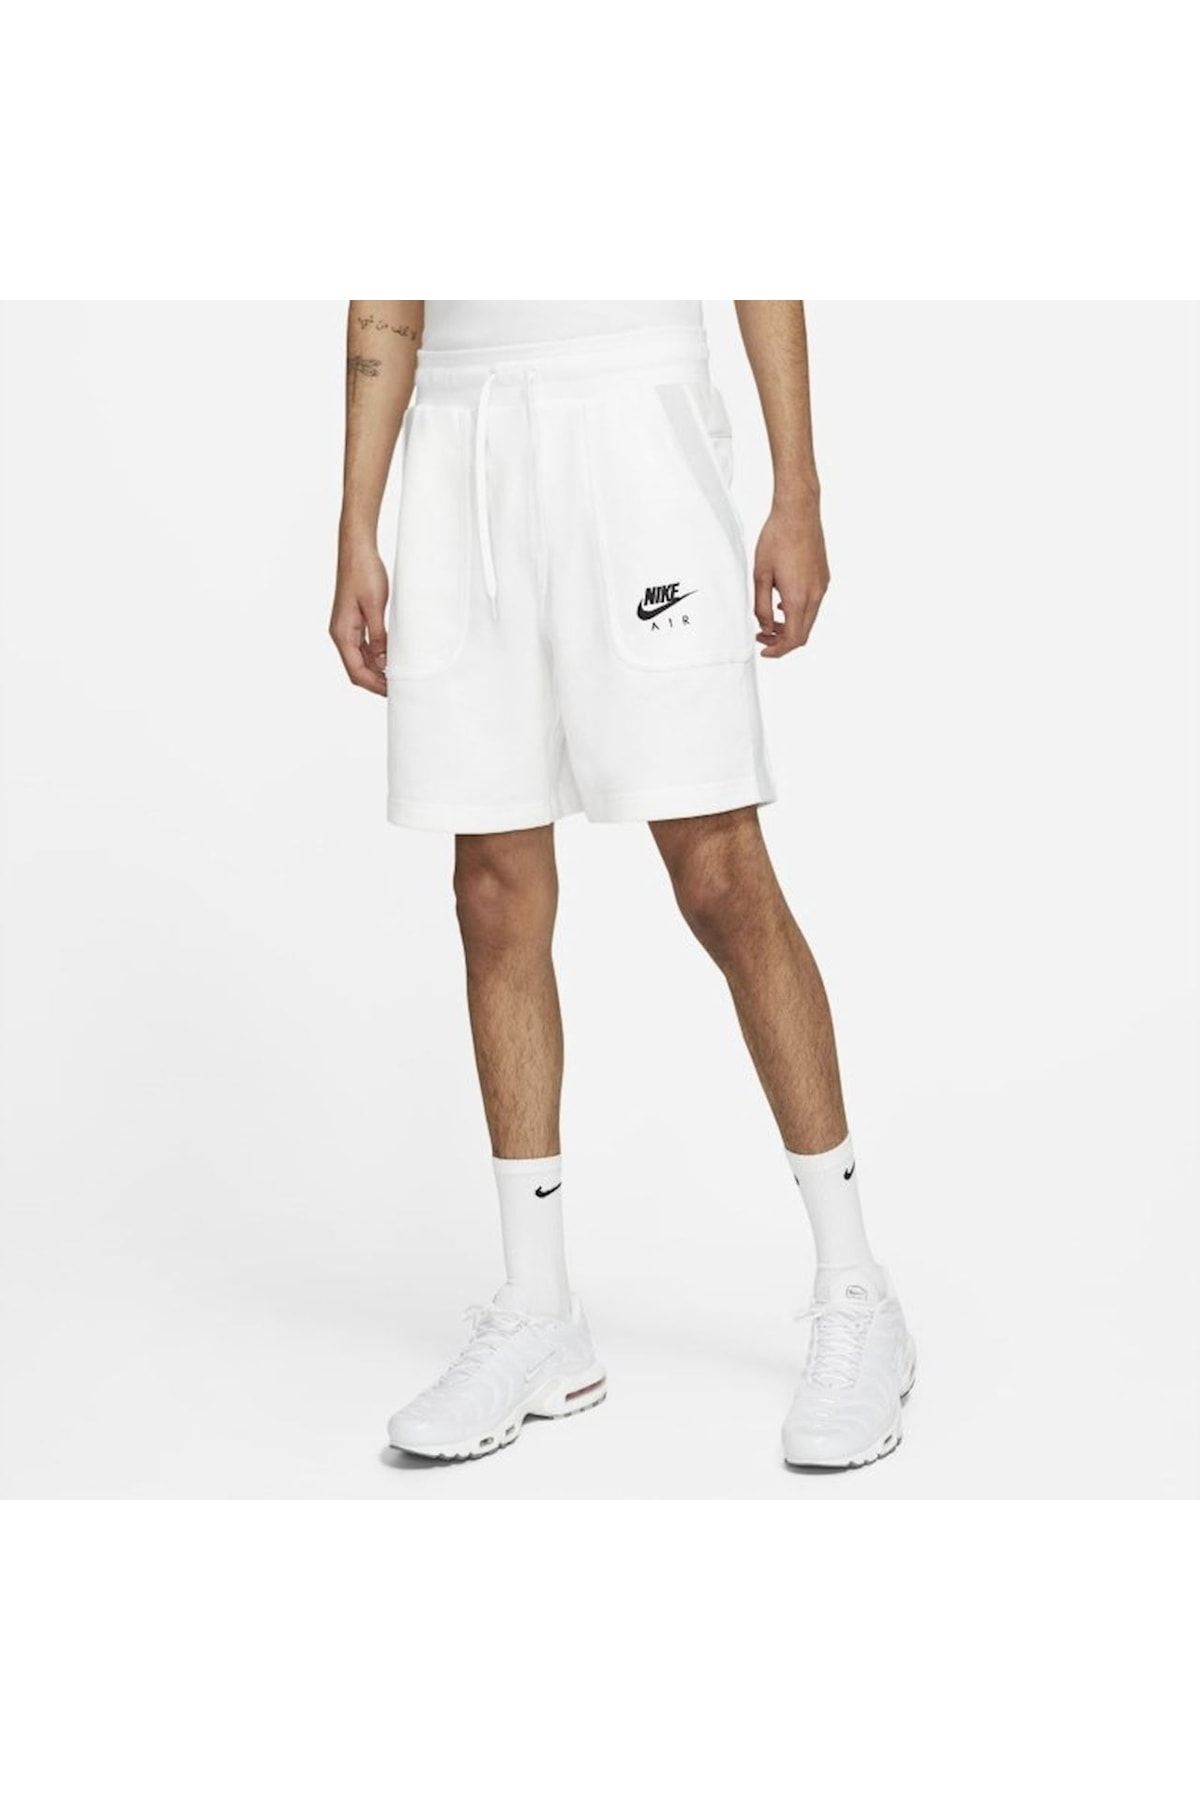 Nike Air Erkek Fransız Havlu Şortu Da0188-100